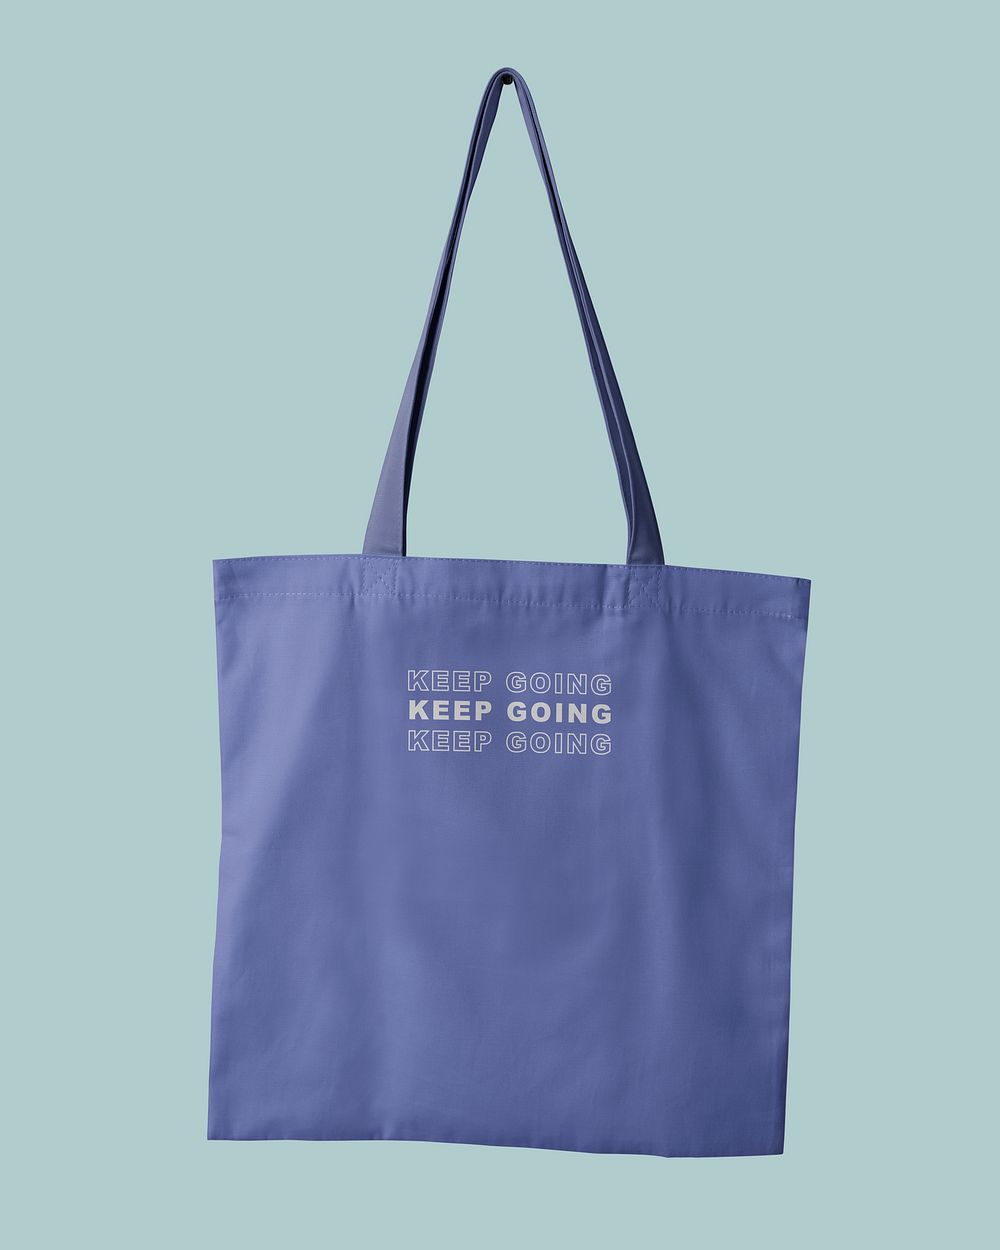 Blue tote bag mockup, printed quote, realistic design psd